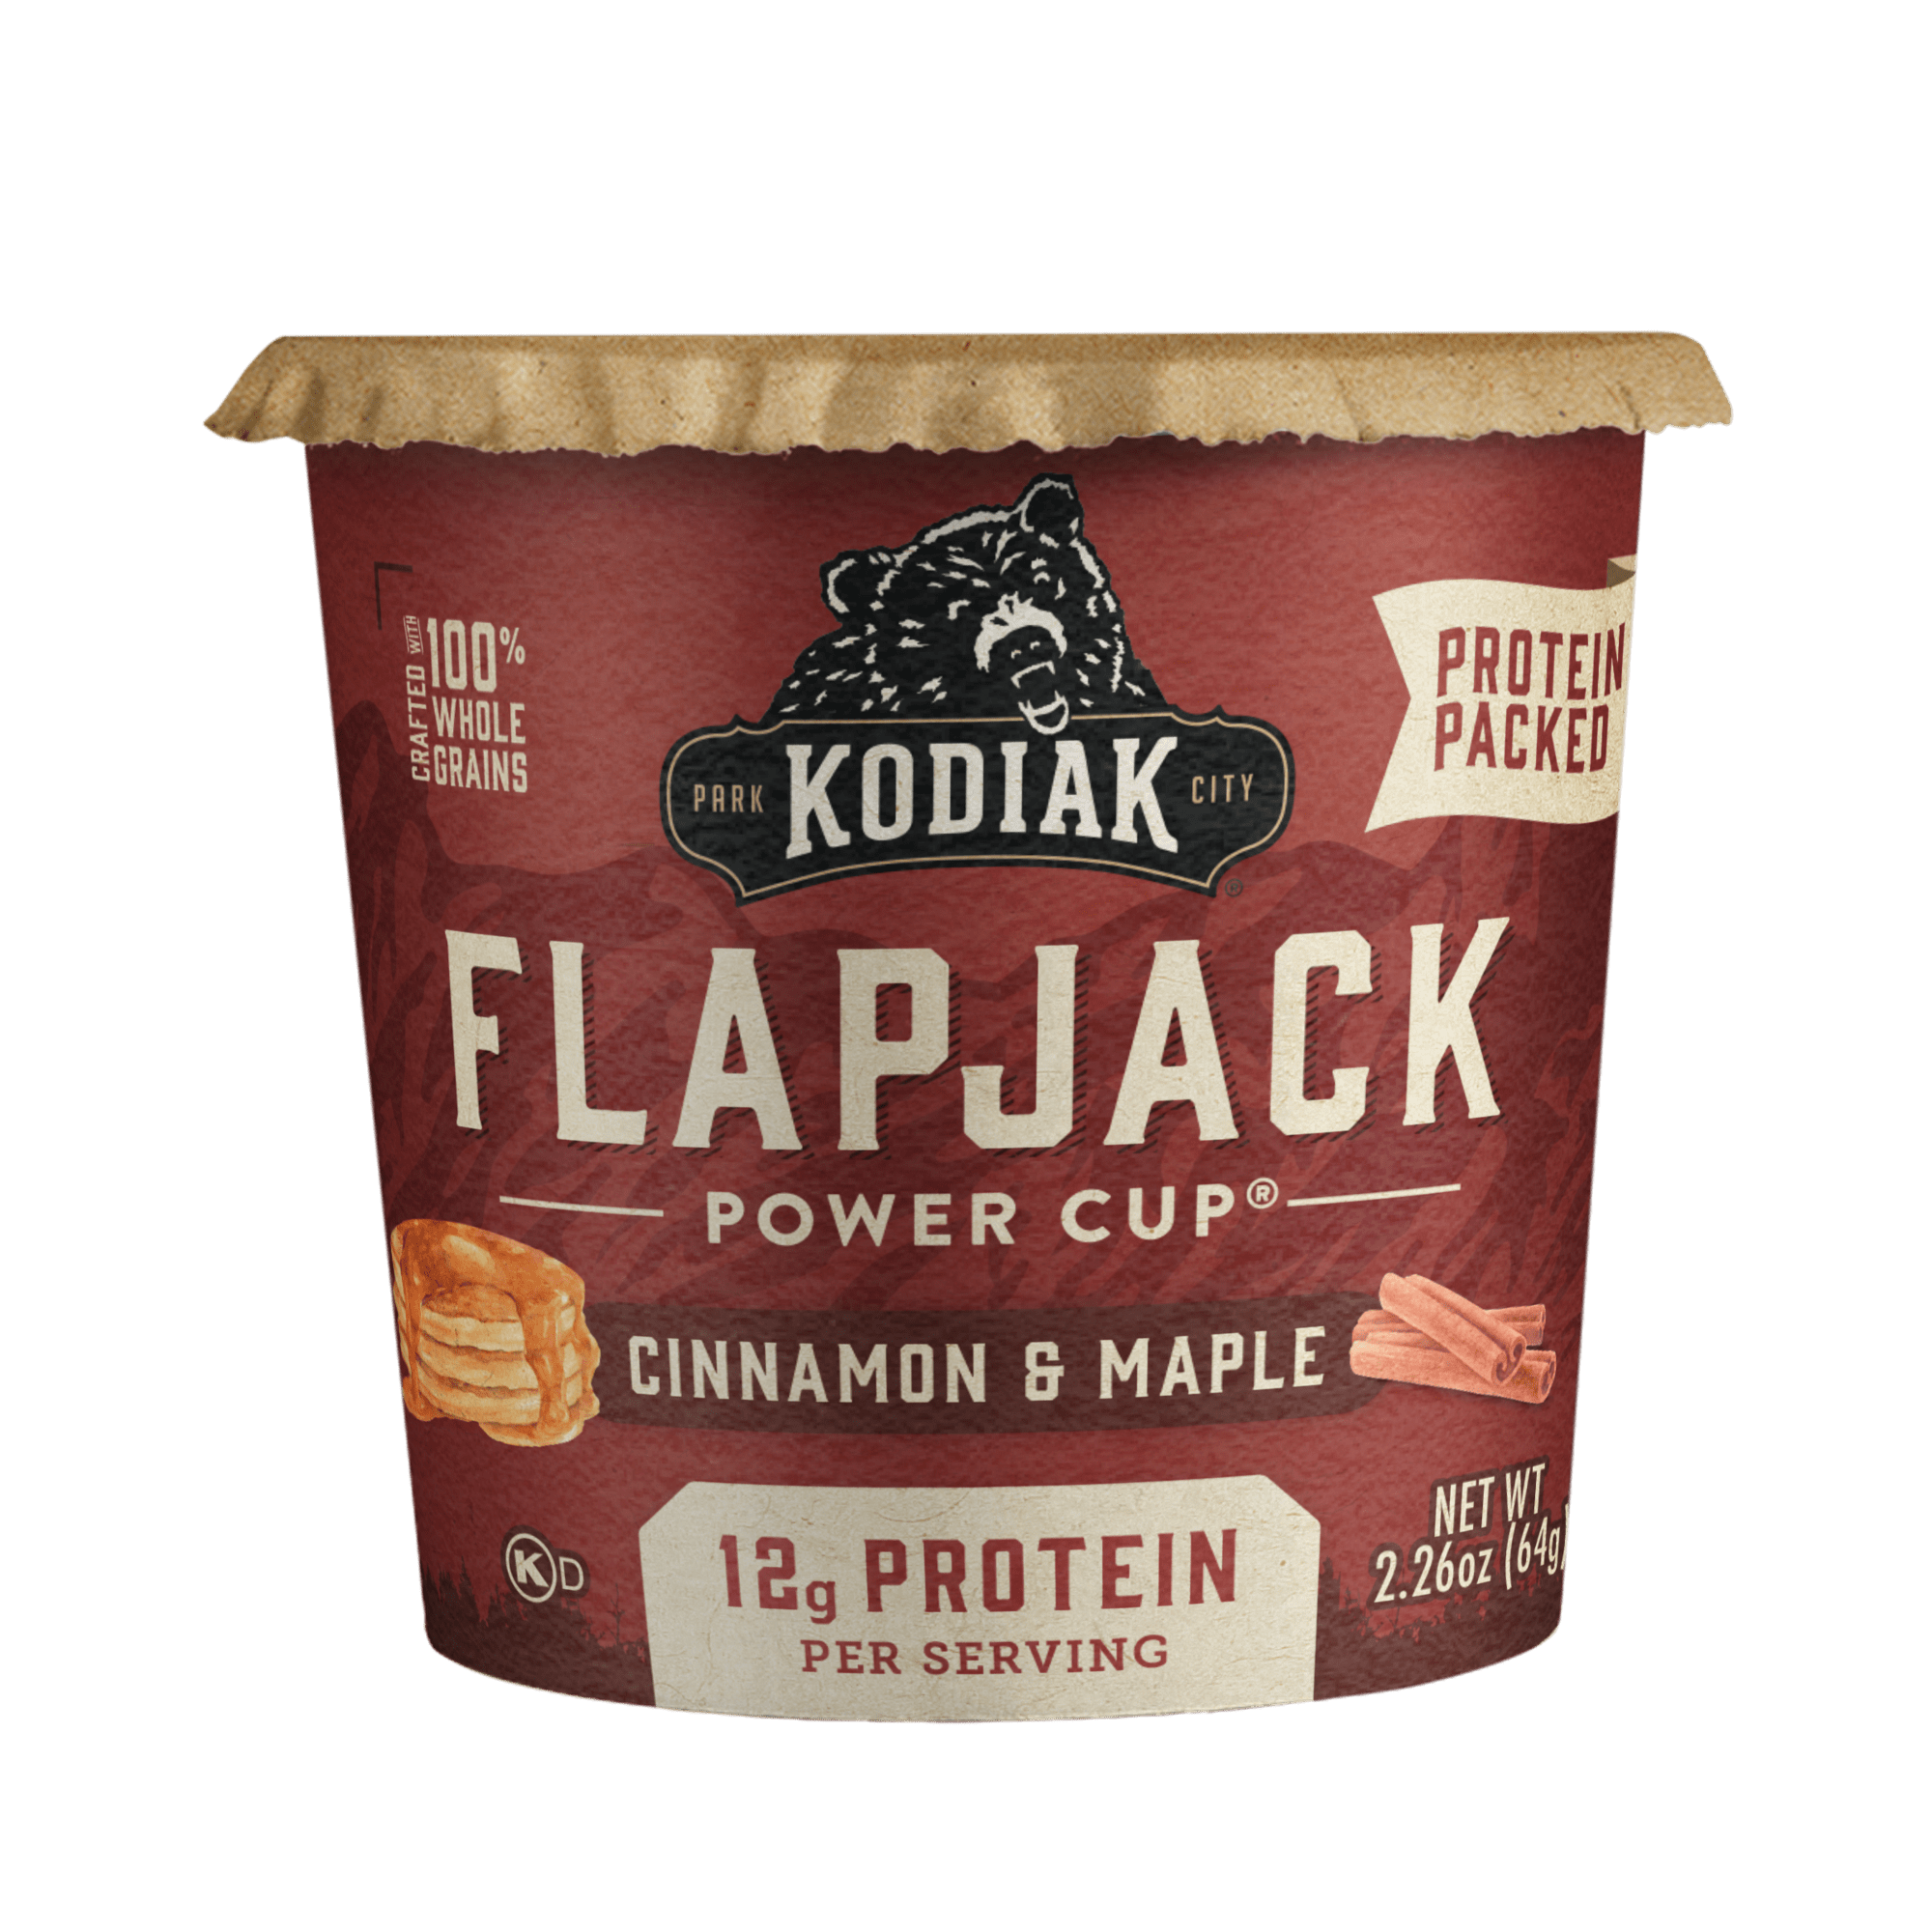 Kodiak Protein-Packed Chocolate Chip Muffin Power Cup, 2.36 oz - Walmart.com